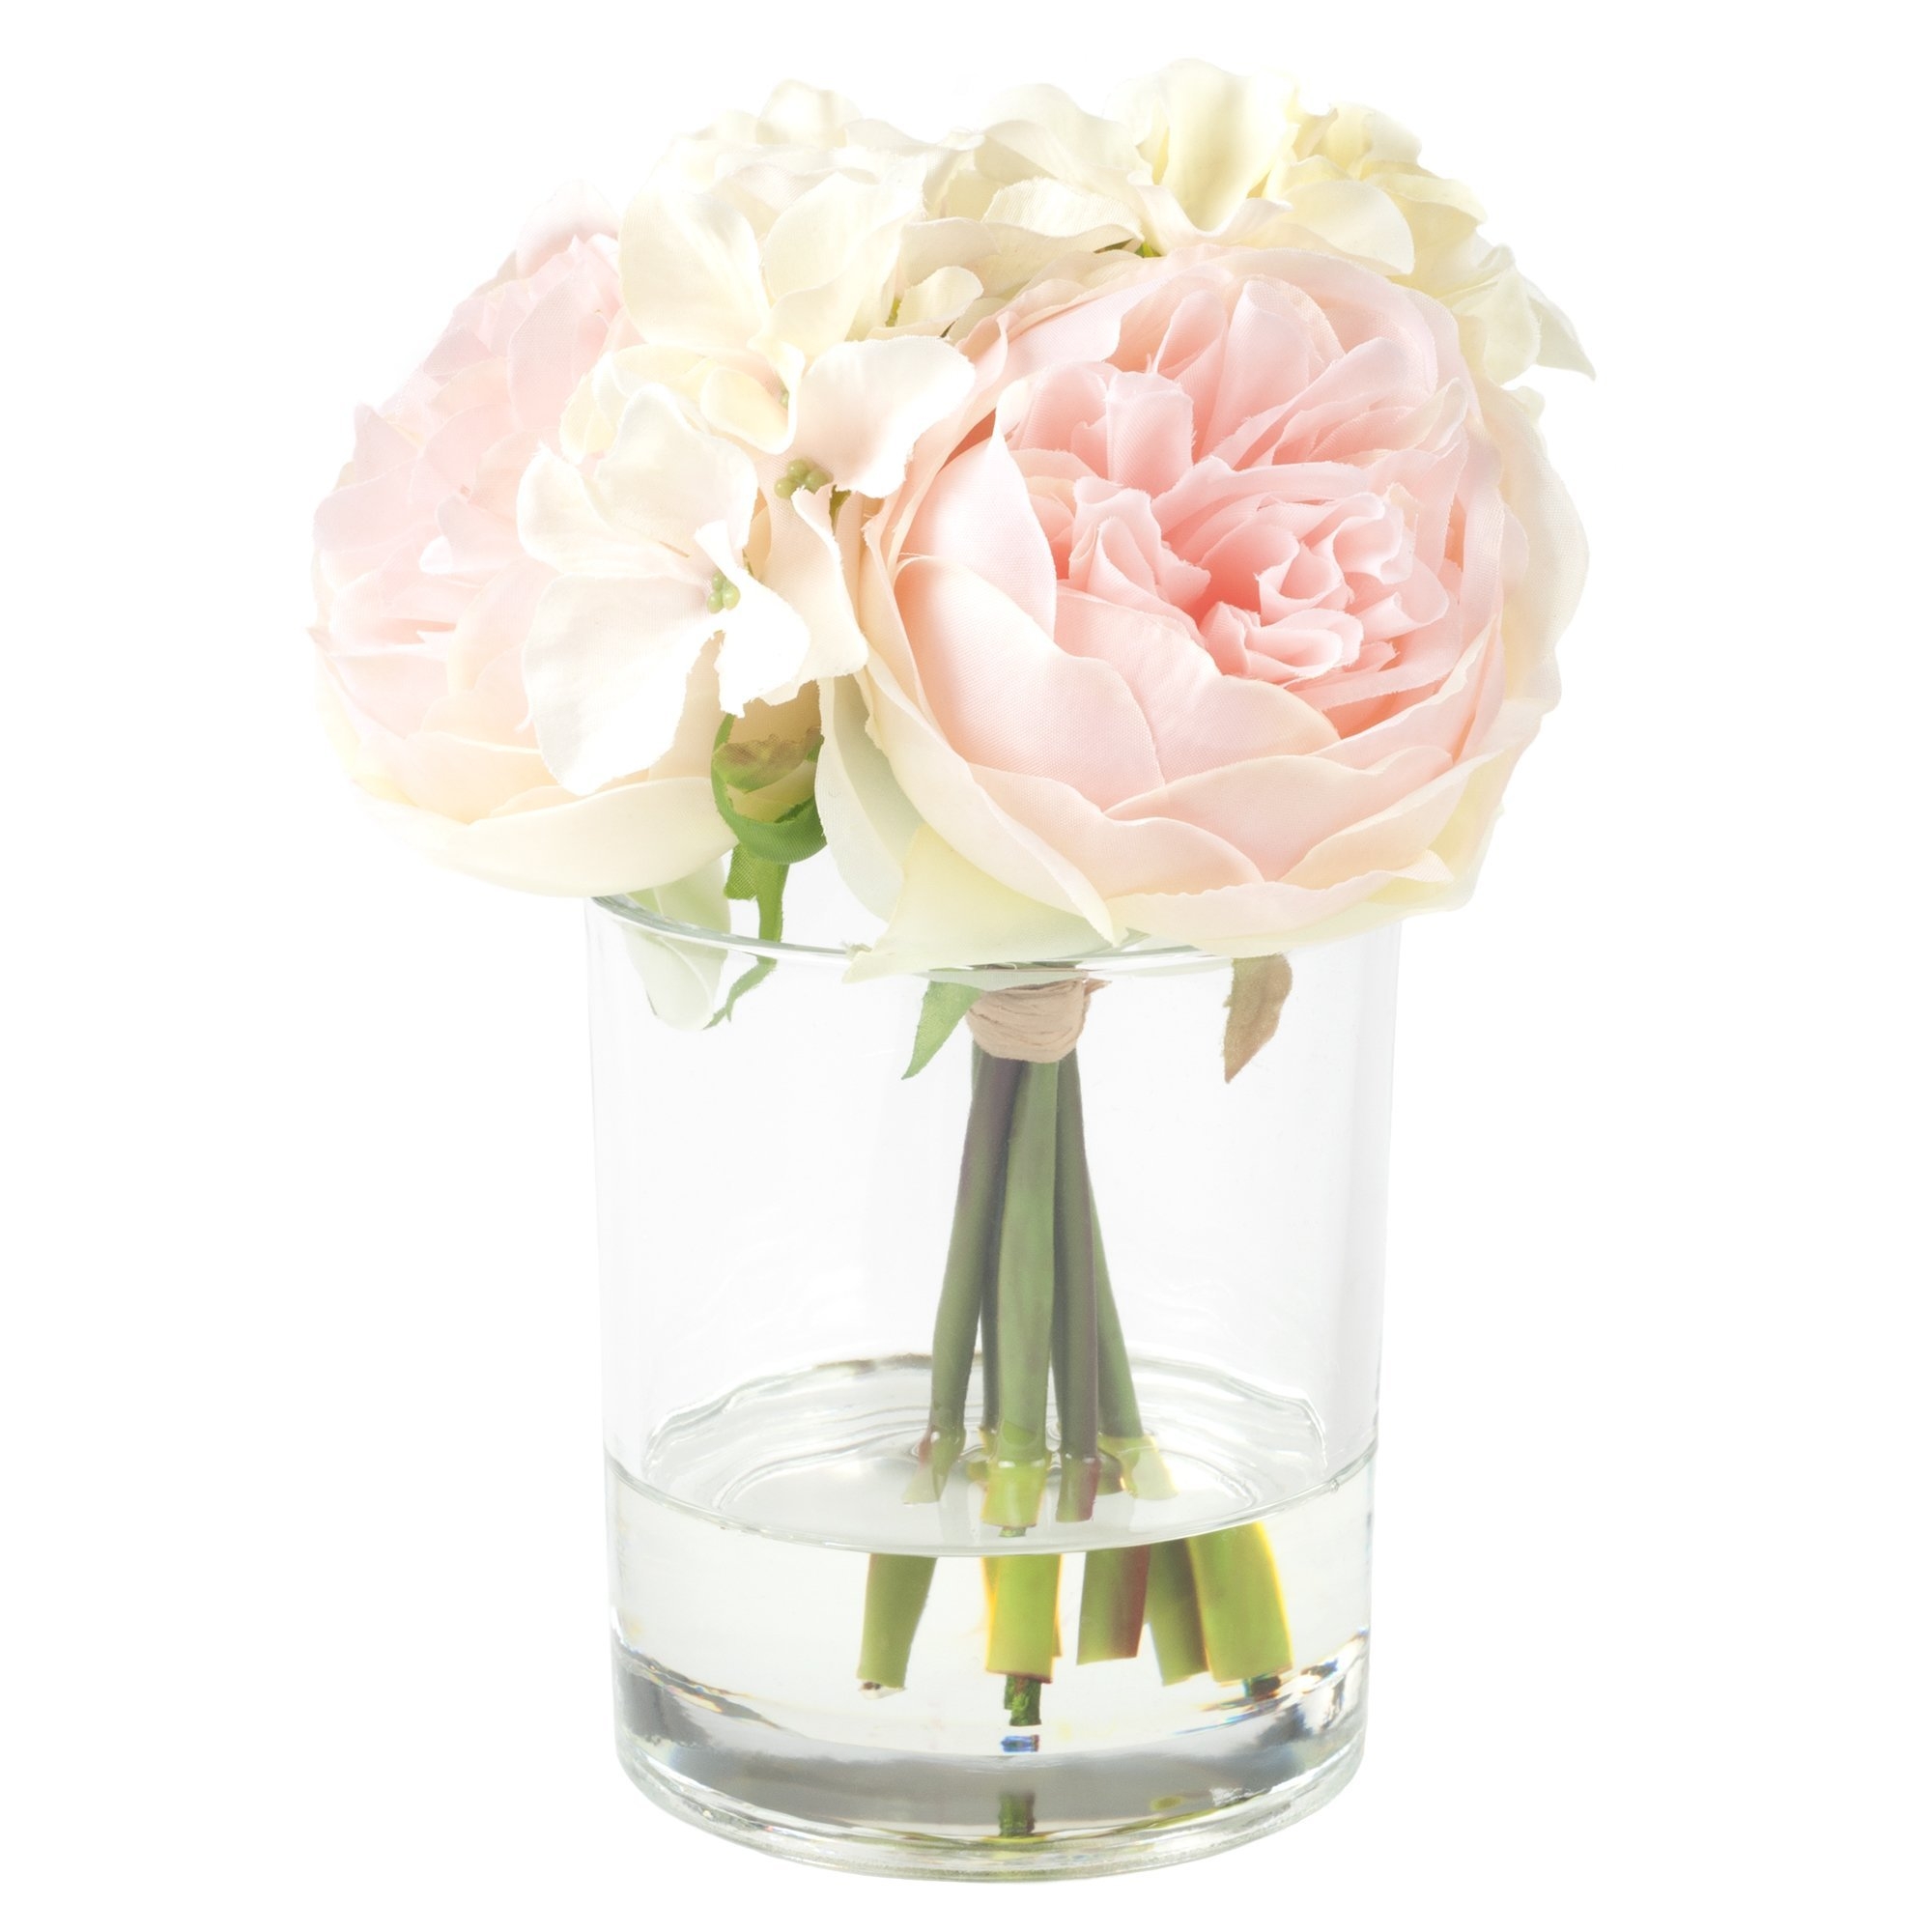 Hydrangea and Rose Arrangement in Glass Vase - Image 0